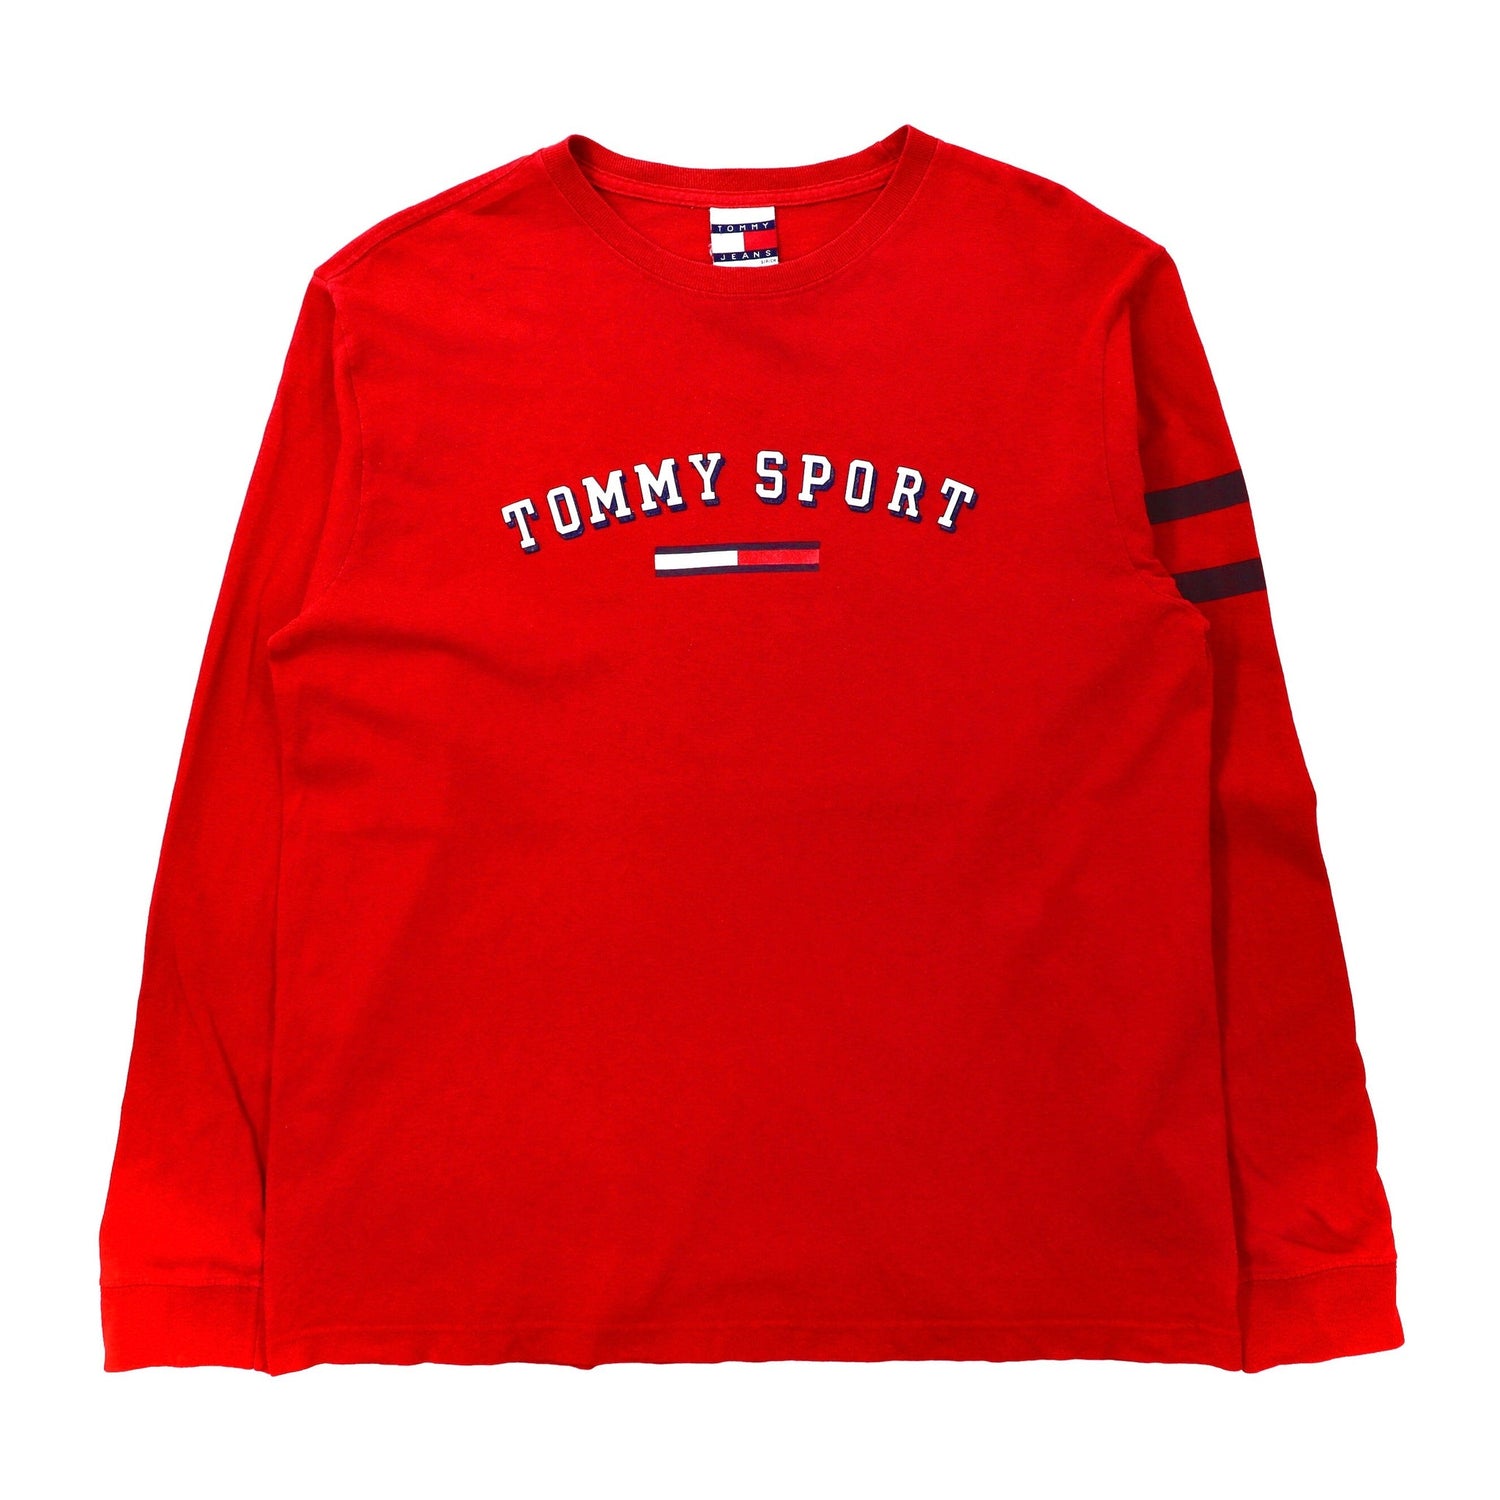 TOMMY JEANS ロングスリーブTシャツ S レッド コットン ビッグサイズ ロゴ 90年代 メキシコ製-TOMMY JEANS-古着